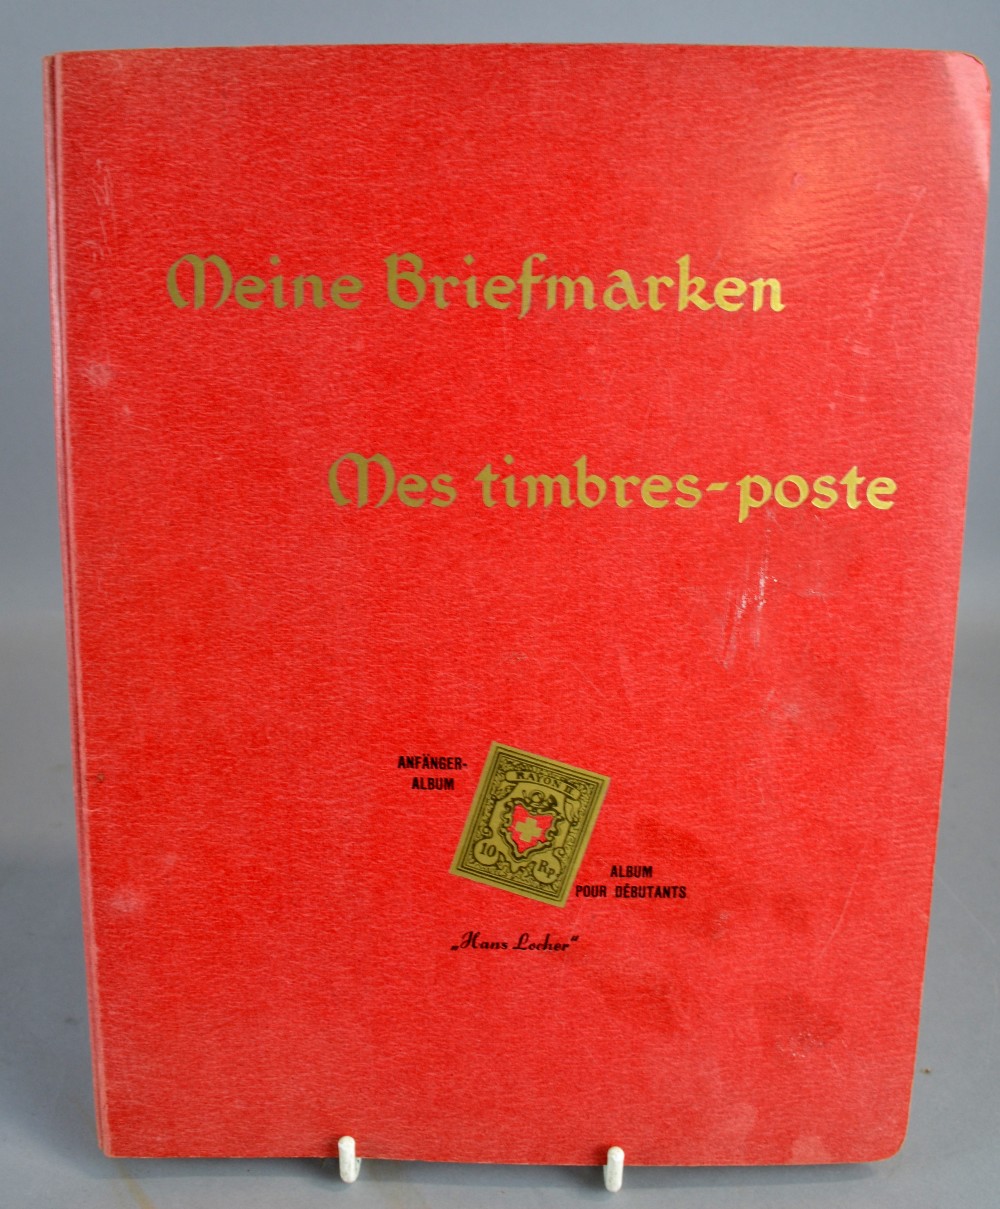 Meine Briefmarken mes timbres-poste, album of Switzerland stamps in special album, very nice clean - Image 3 of 3